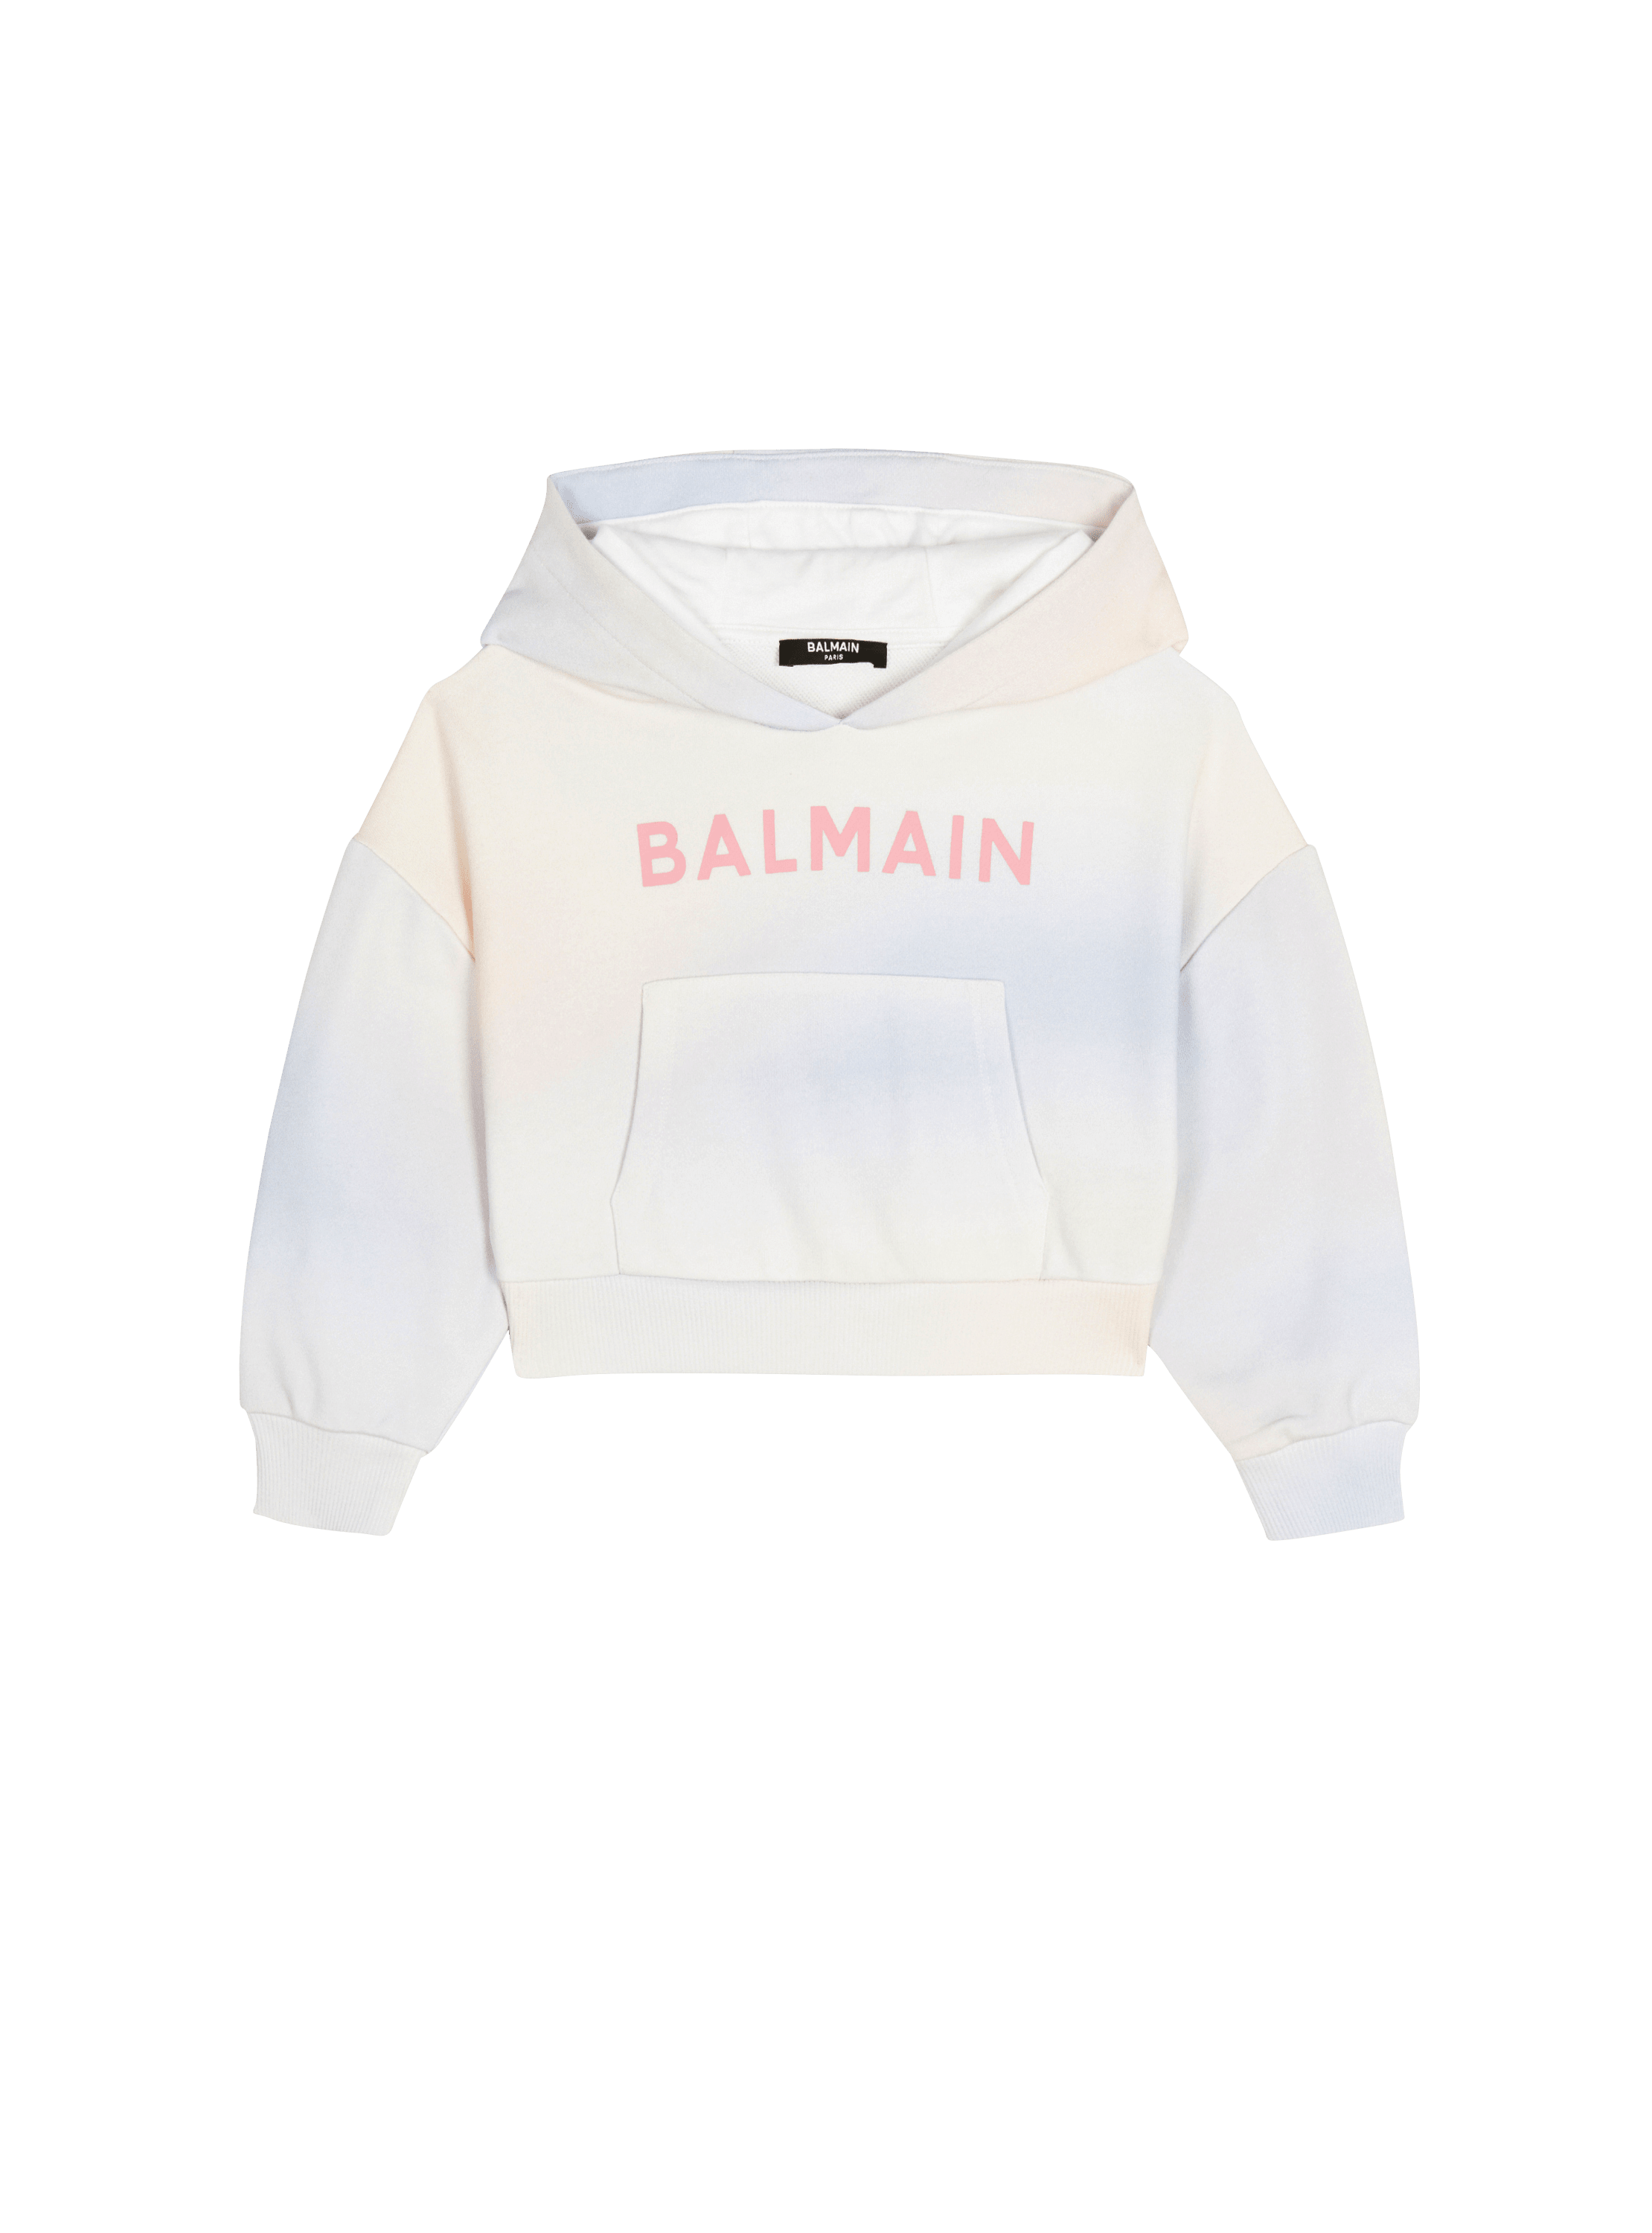 Cotton tie-dye hoodie with Balmain logo